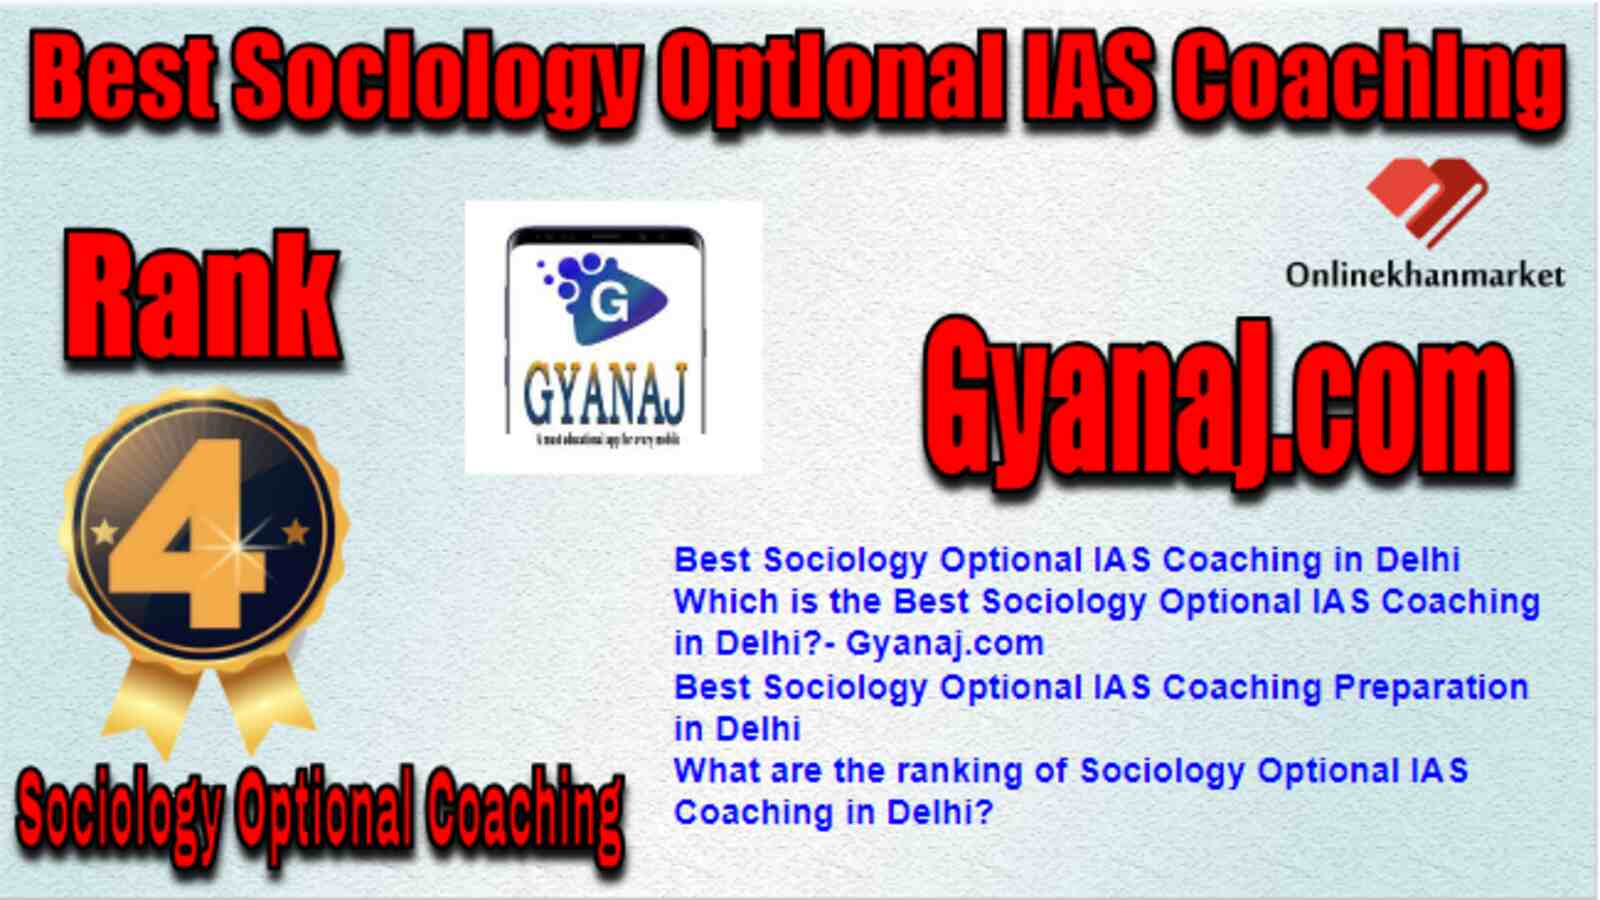 Rank 4 Best Sociology Optional IAS Coaching